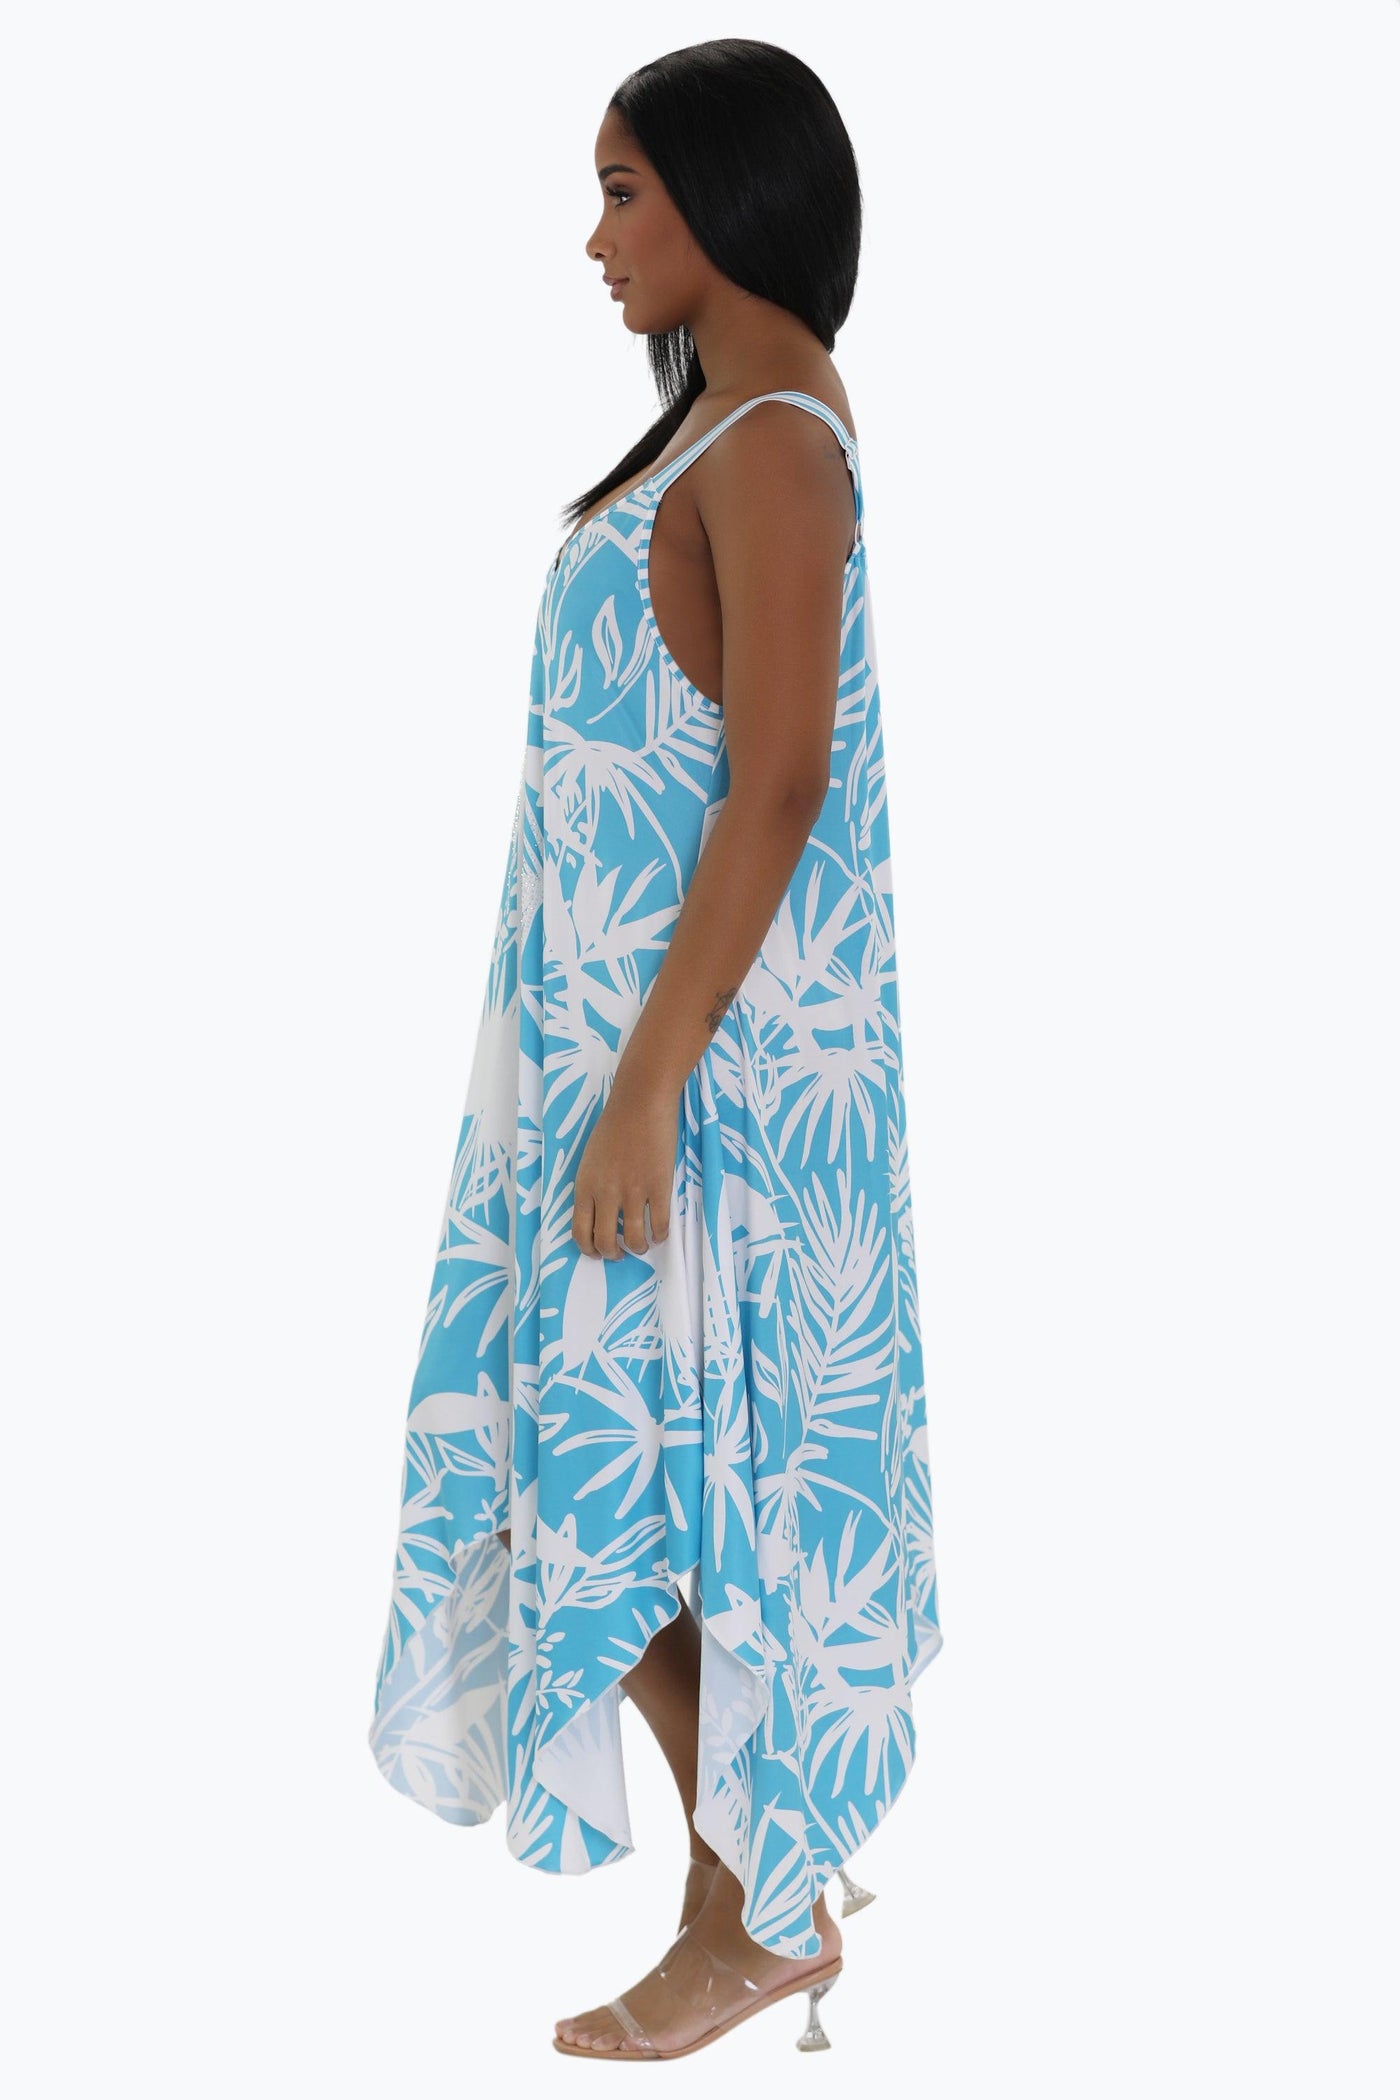 Palm Tree Print Beach Dress 21241 (Adjustable Straps)  - Advance Apparels Inc